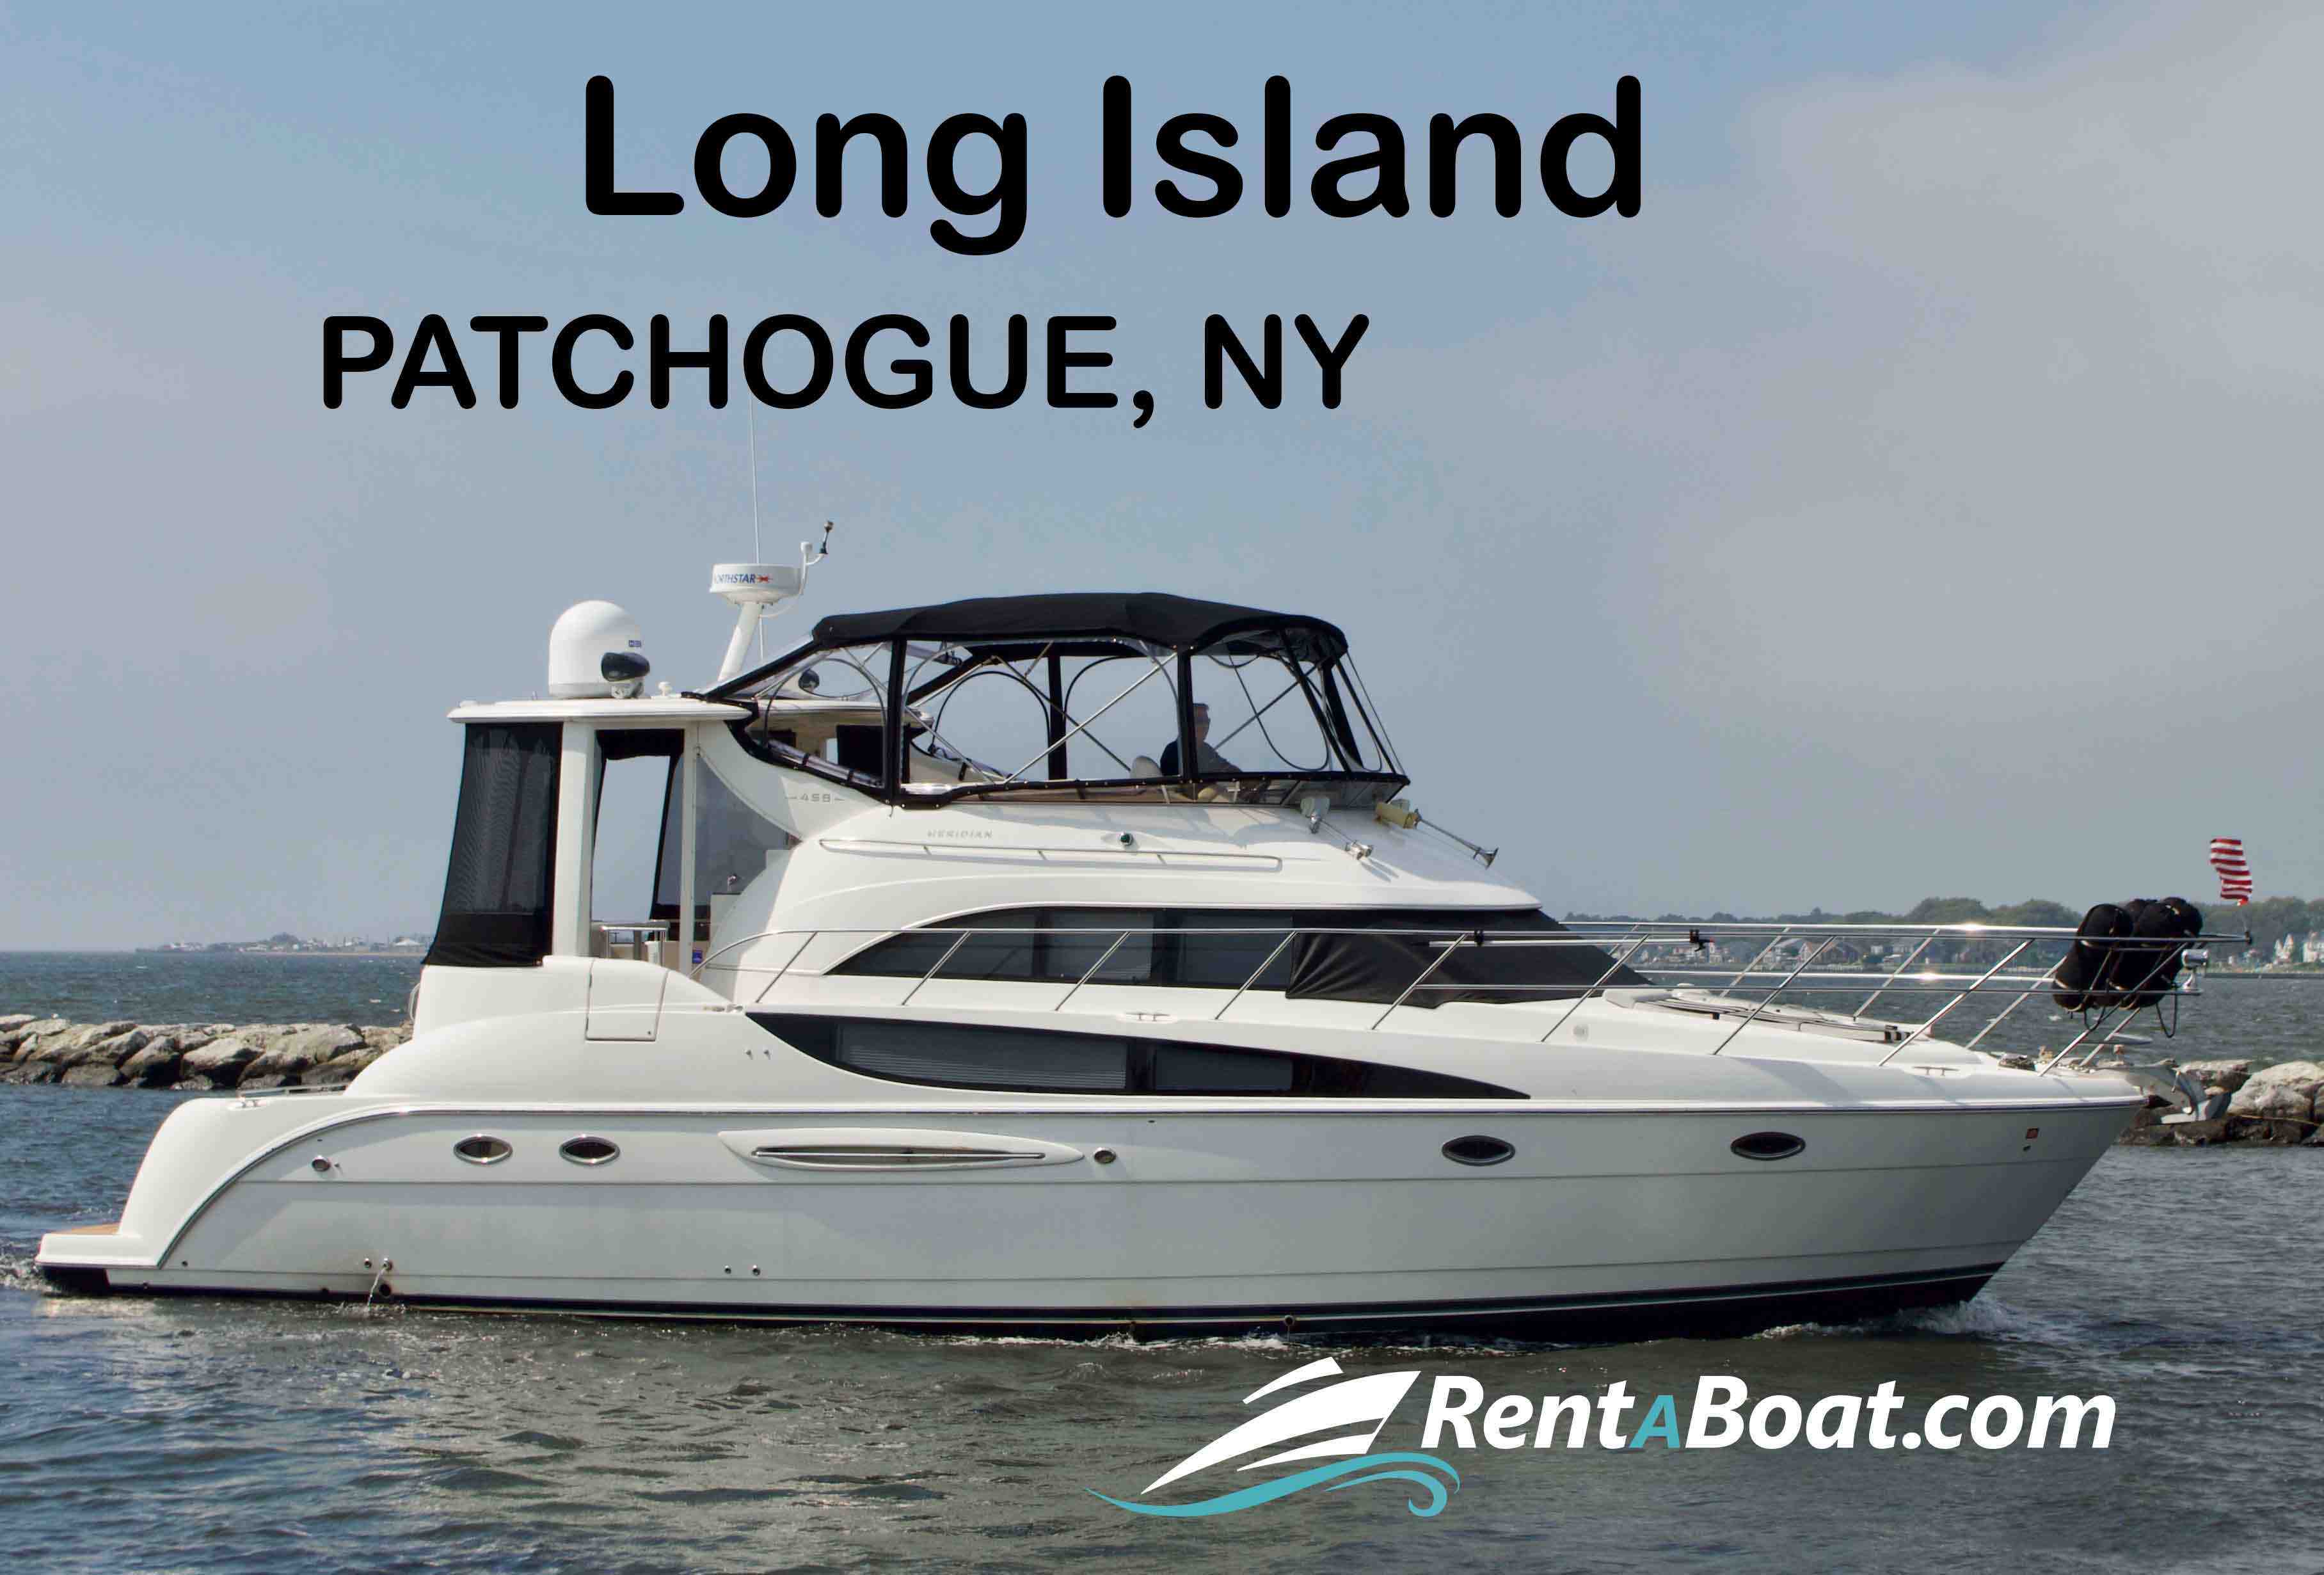 459 Motor Yacht Rental boat rentals New York Long Island, NY New York  Meridian Motor Yacht 2006 48 